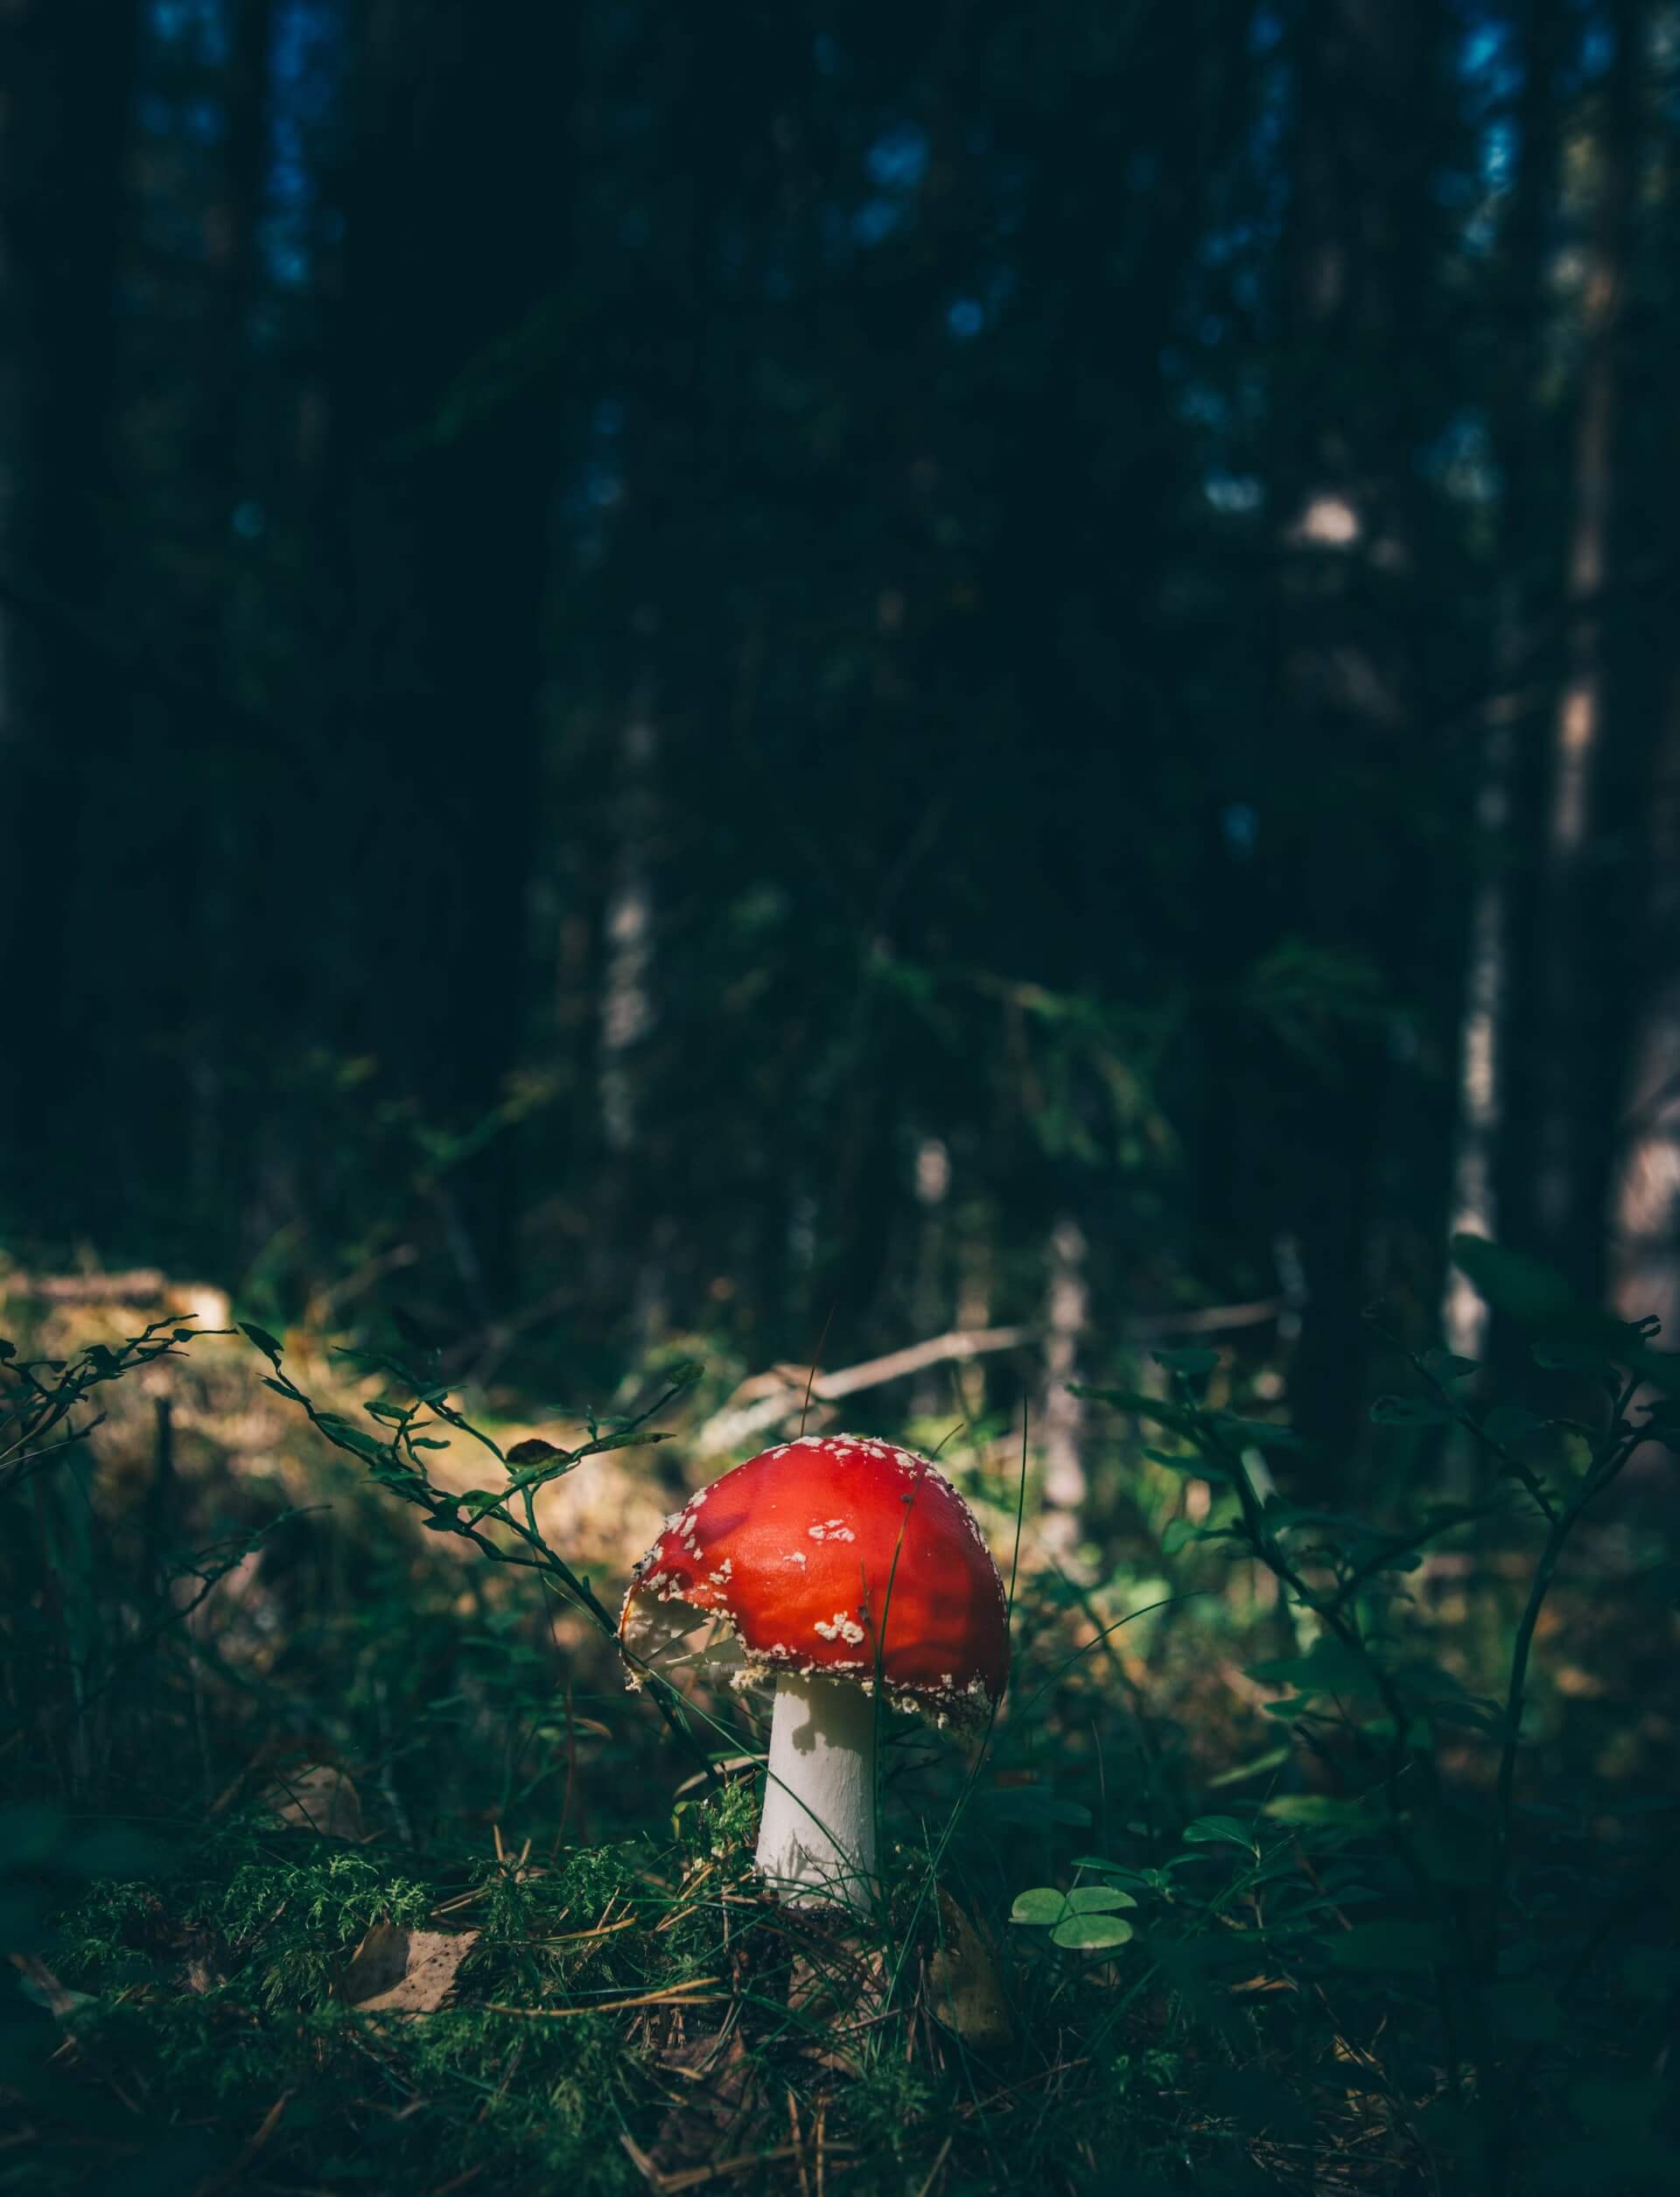 Naturfoto på en svamp i skogen.